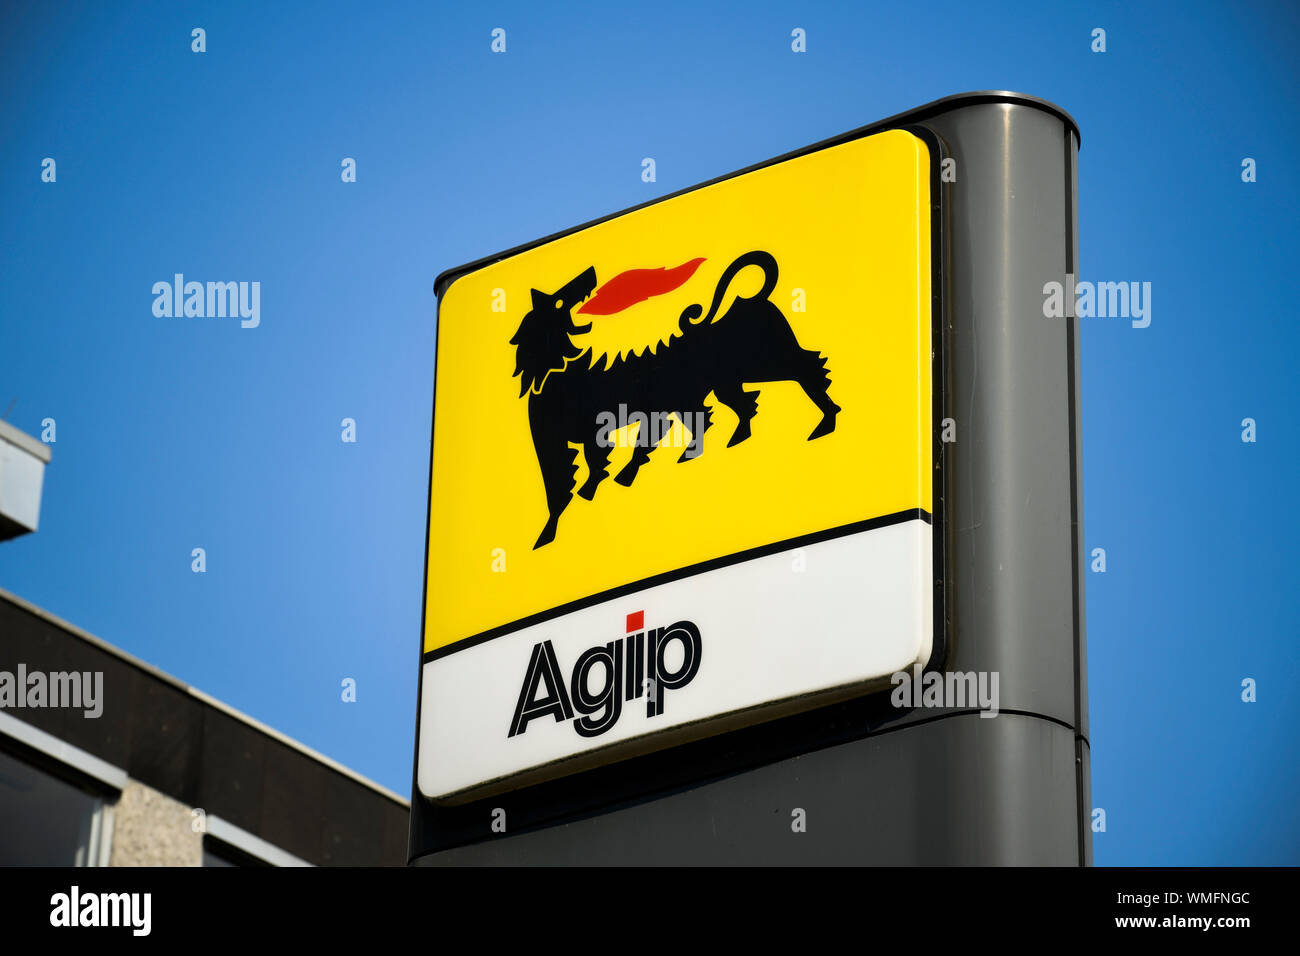 Agip Tankstelle, Hannover, Allemagne, Deutschland Banque D'Images